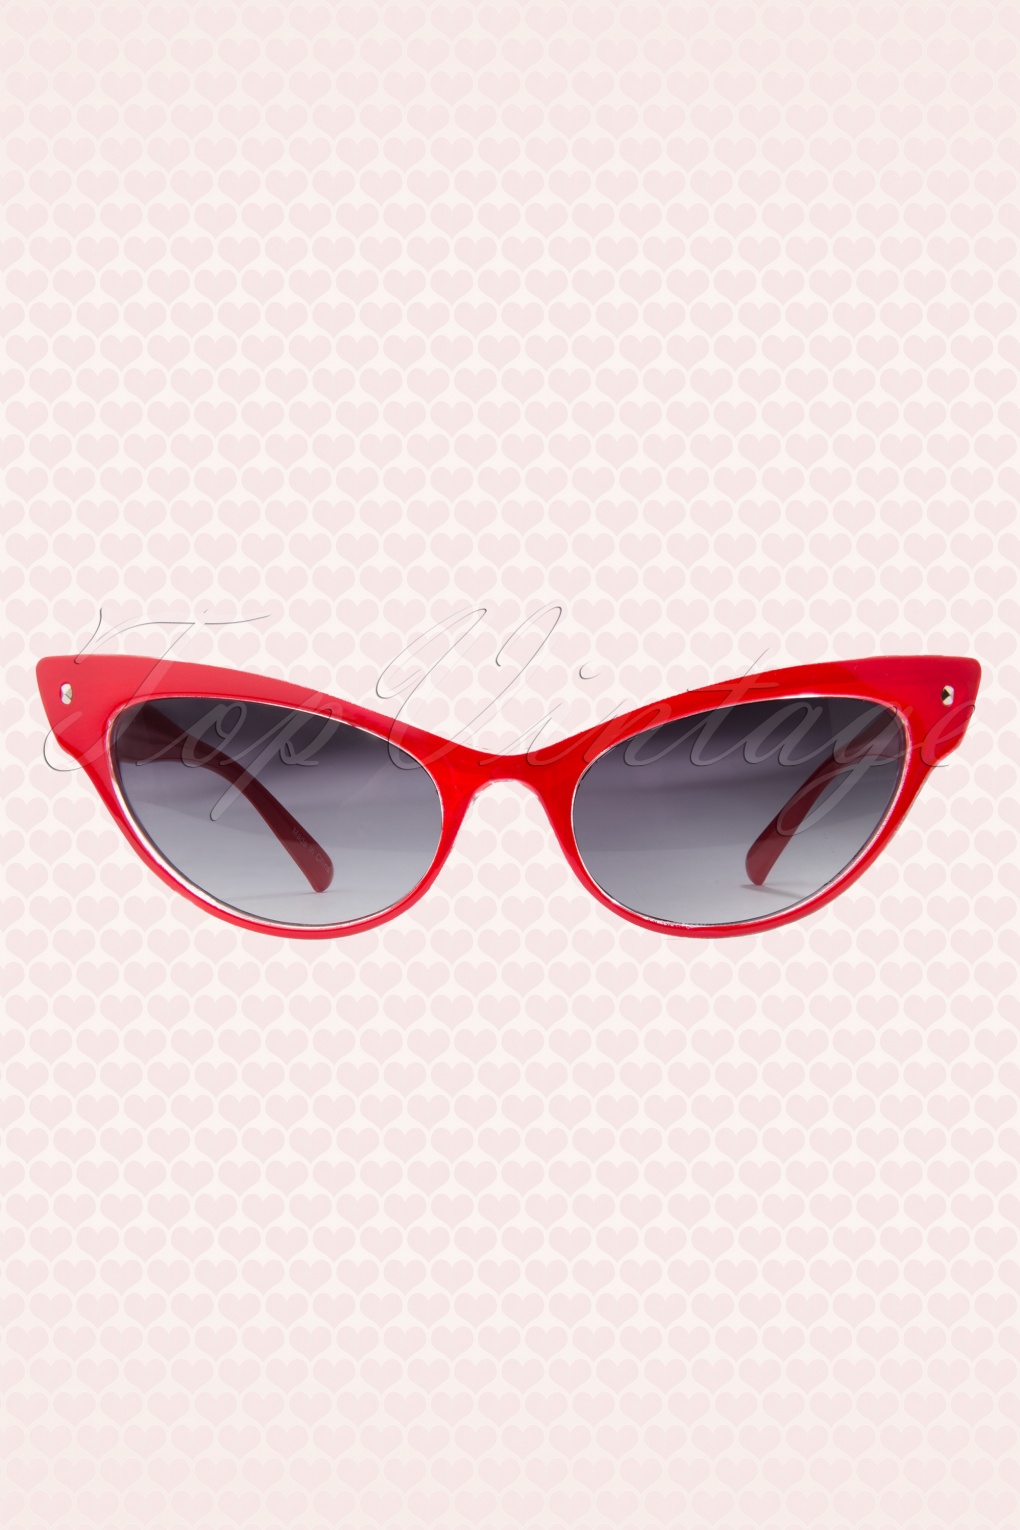 50s Venice Beach Cat Eye Glasses Red